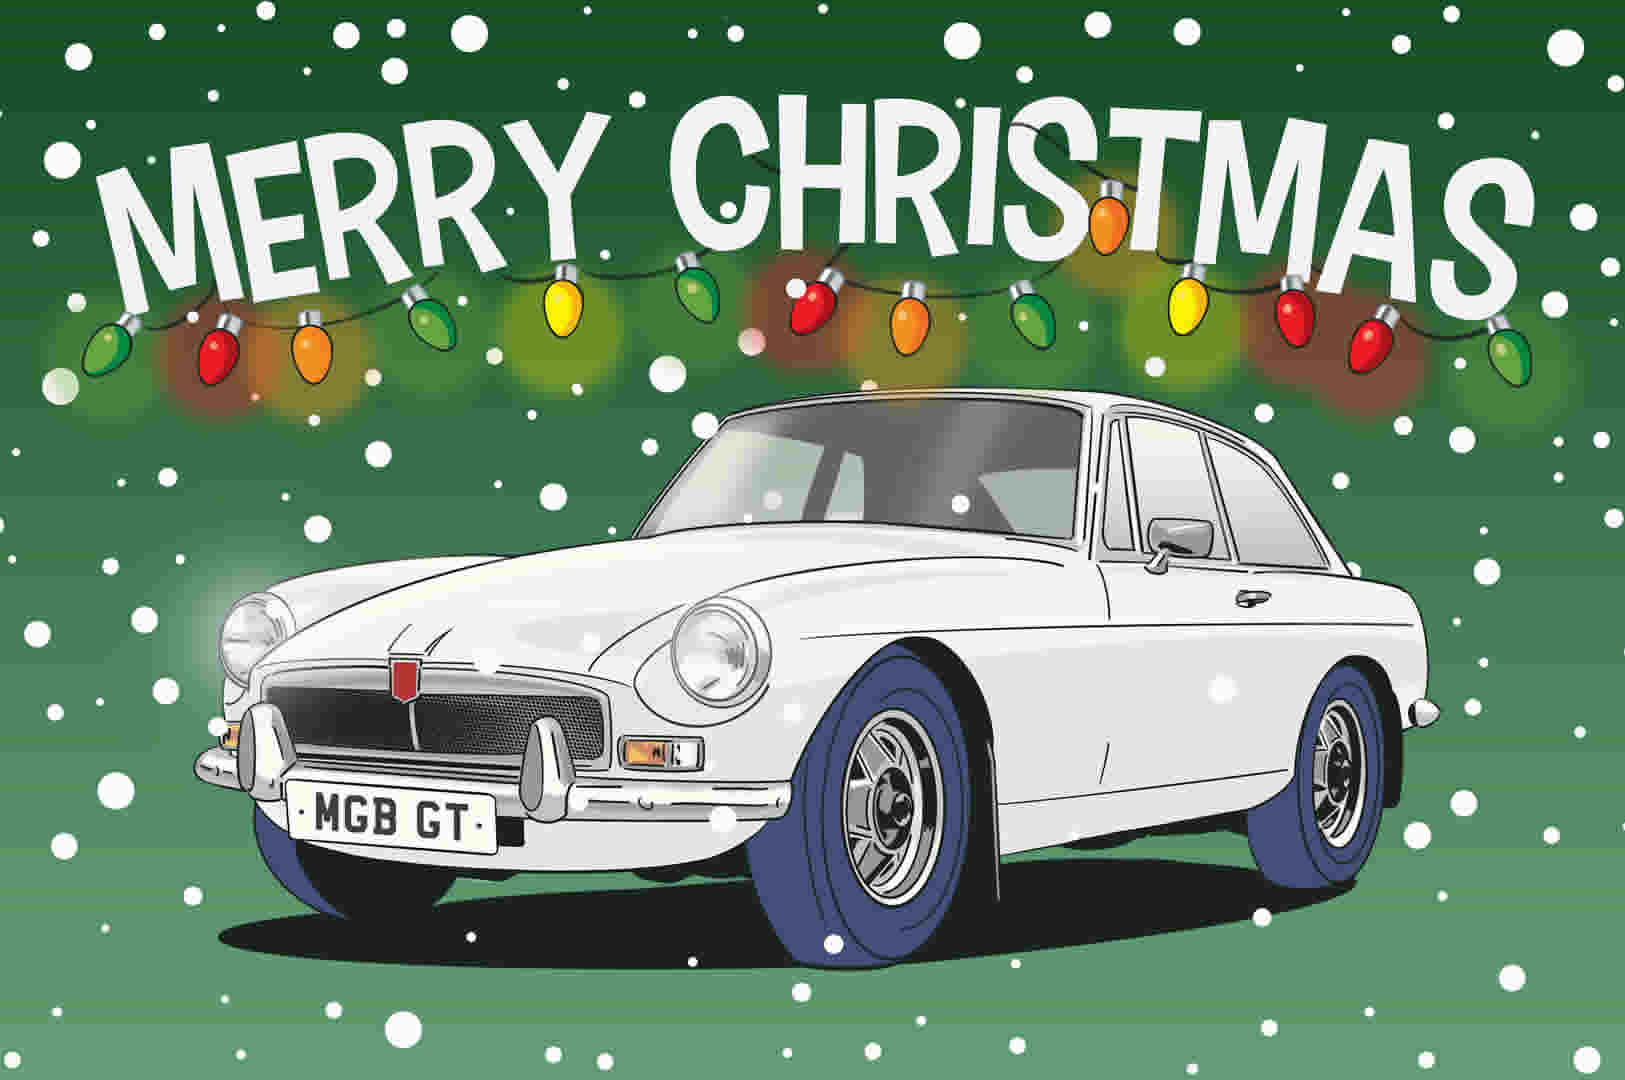 MGB White Car Christmas Card